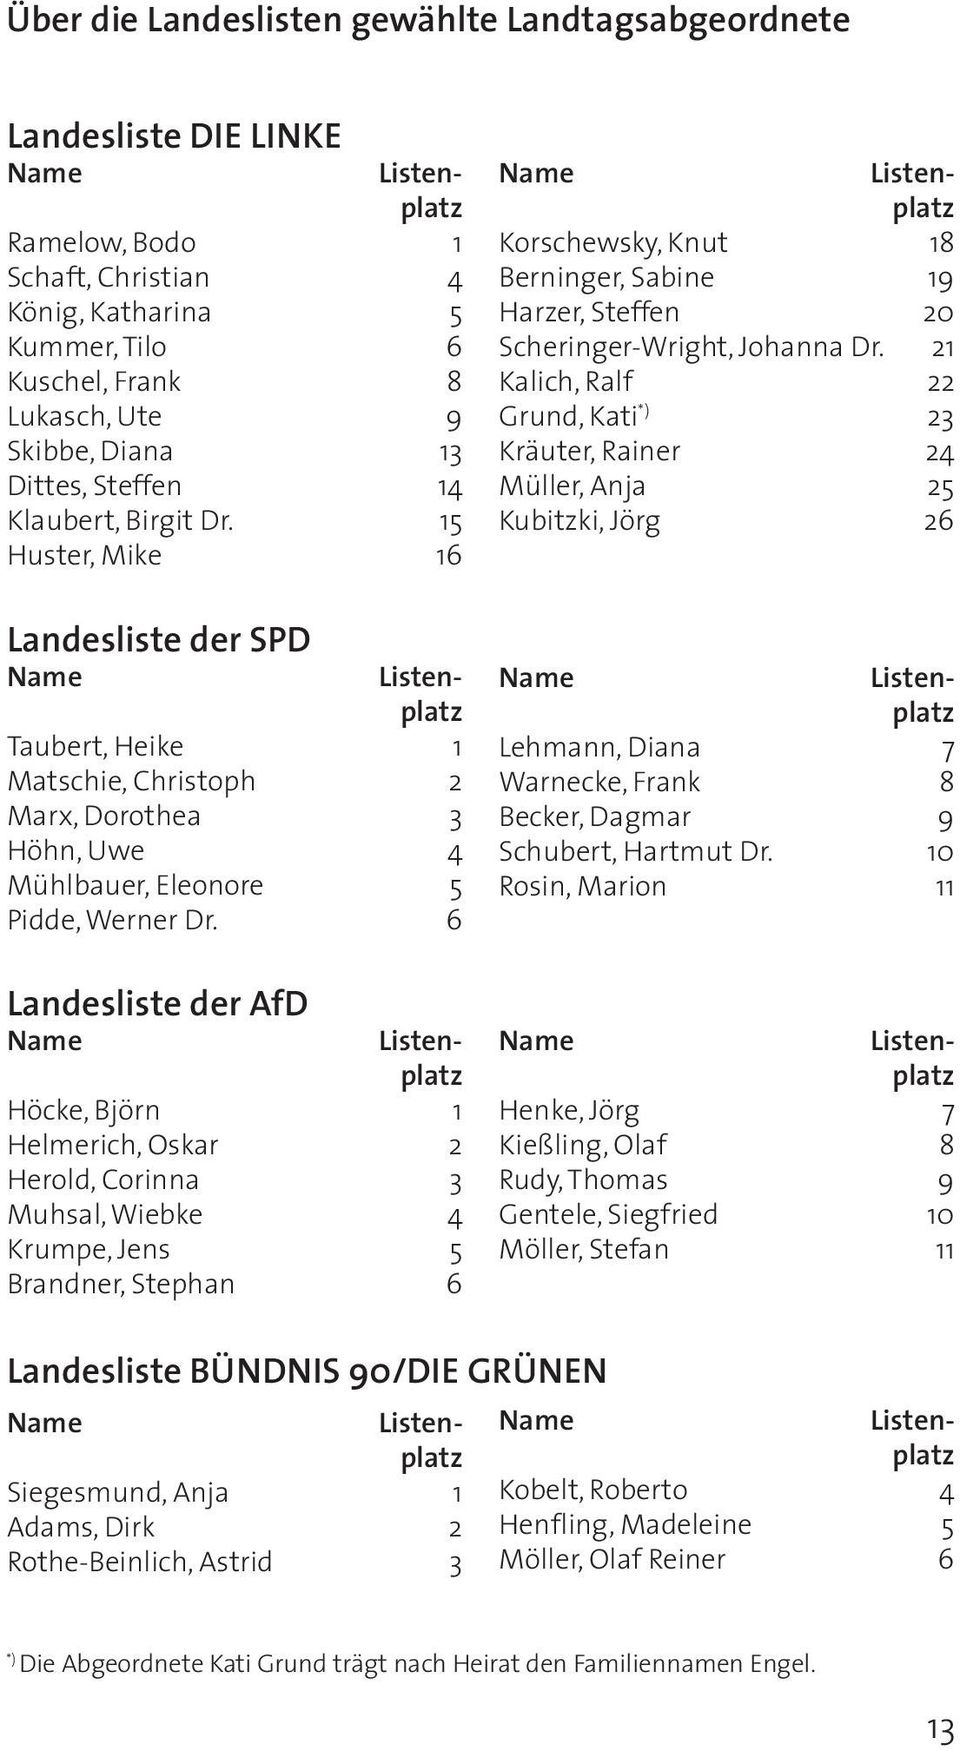 15 Huster, Mike 16 Landesliste der SPD Name Listenplatz Taubert, Heike 1 Matschie, Christoph 2 Marx, Dorothea 3 Höhn, Uwe 4 Mühlbauer, Eleonore 5 Pidde, Werner Dr.